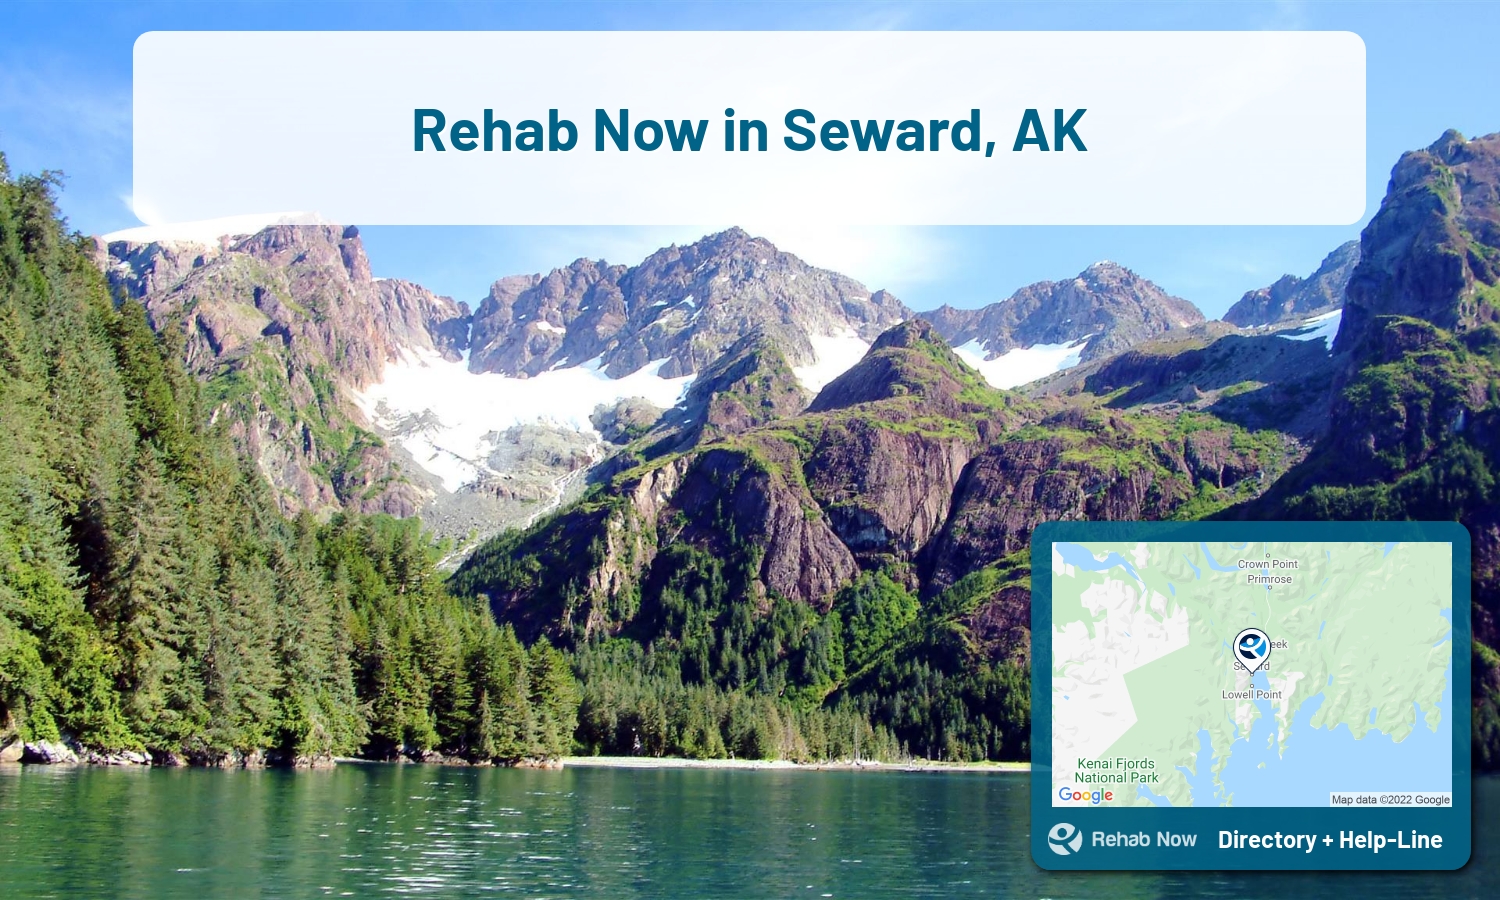 Seward, AK Treatment Centers. Find drug rehab in Seward, Alaska, or detox and treatment programs. Get the right help now!